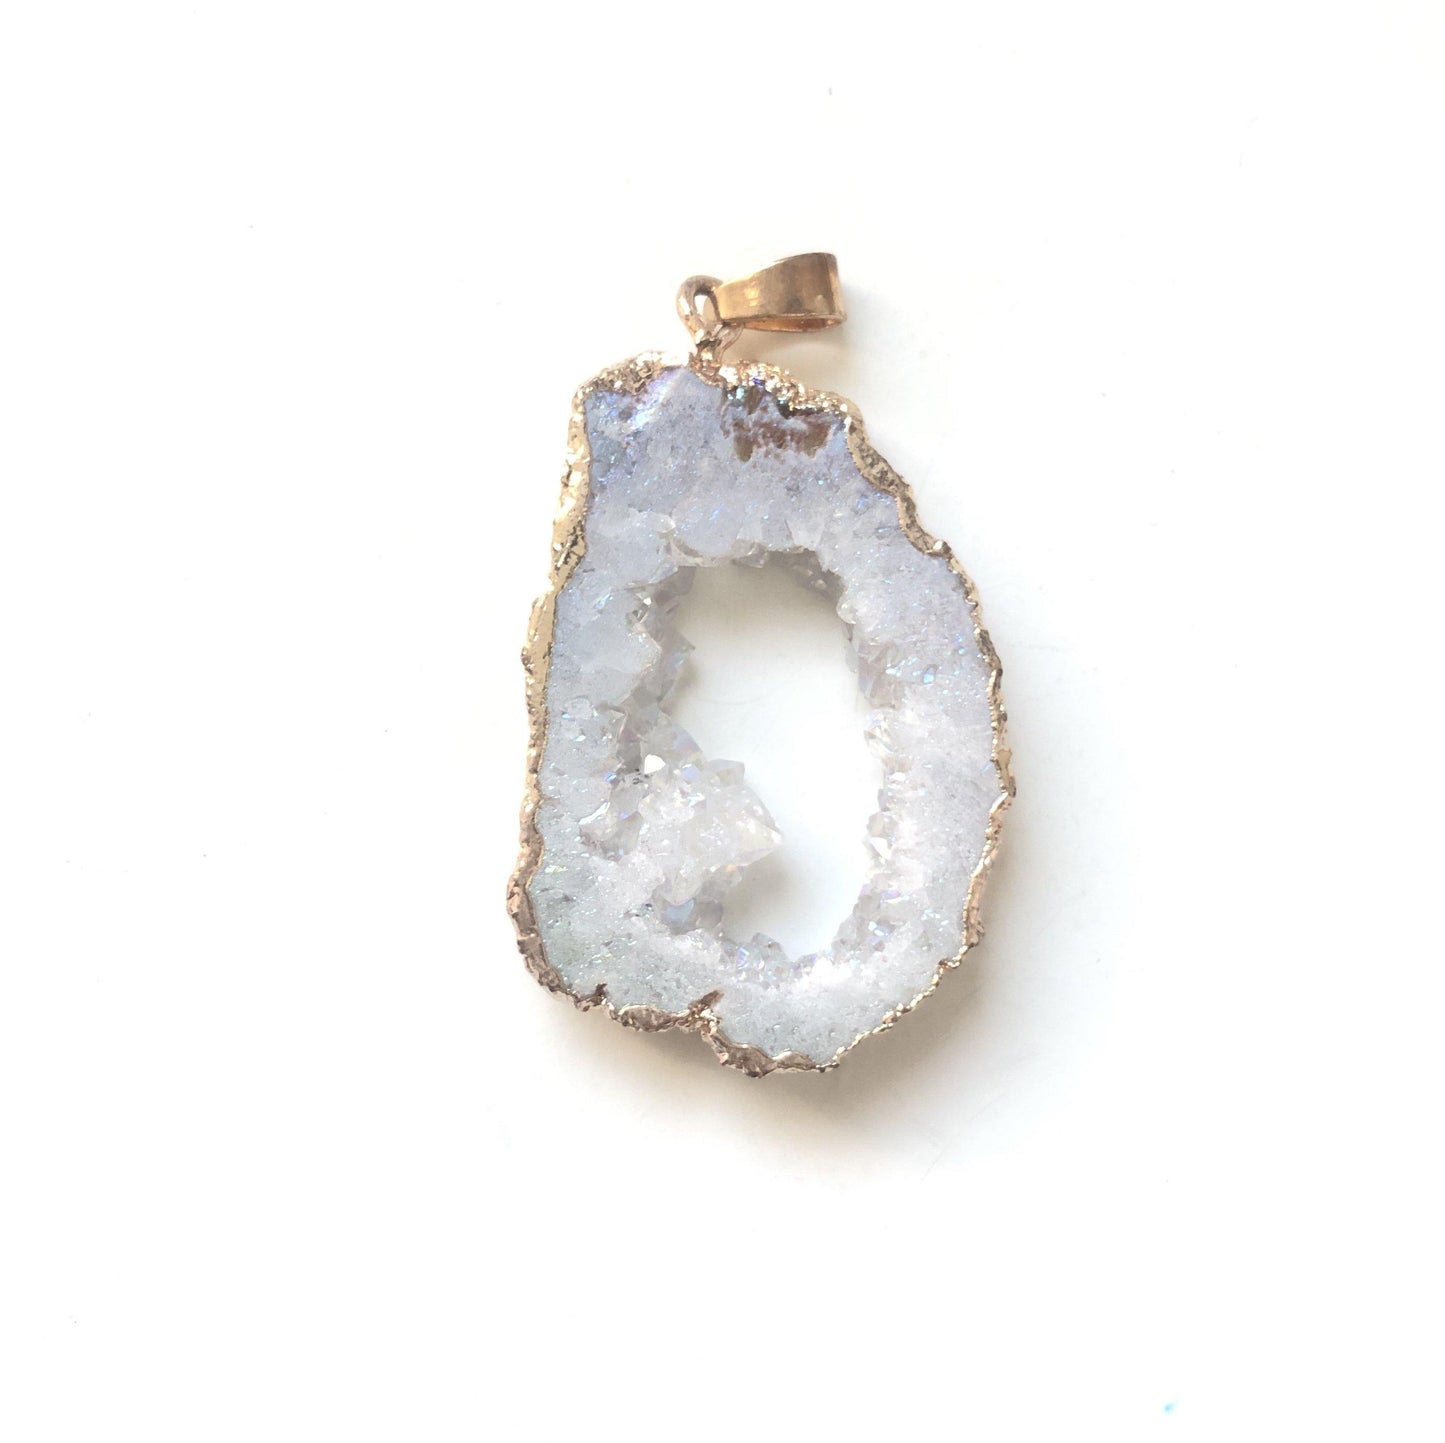 5pcs/lot 30-50mm Natural Agate Druzy Charm White Stone Charms Charms Beads Beyond